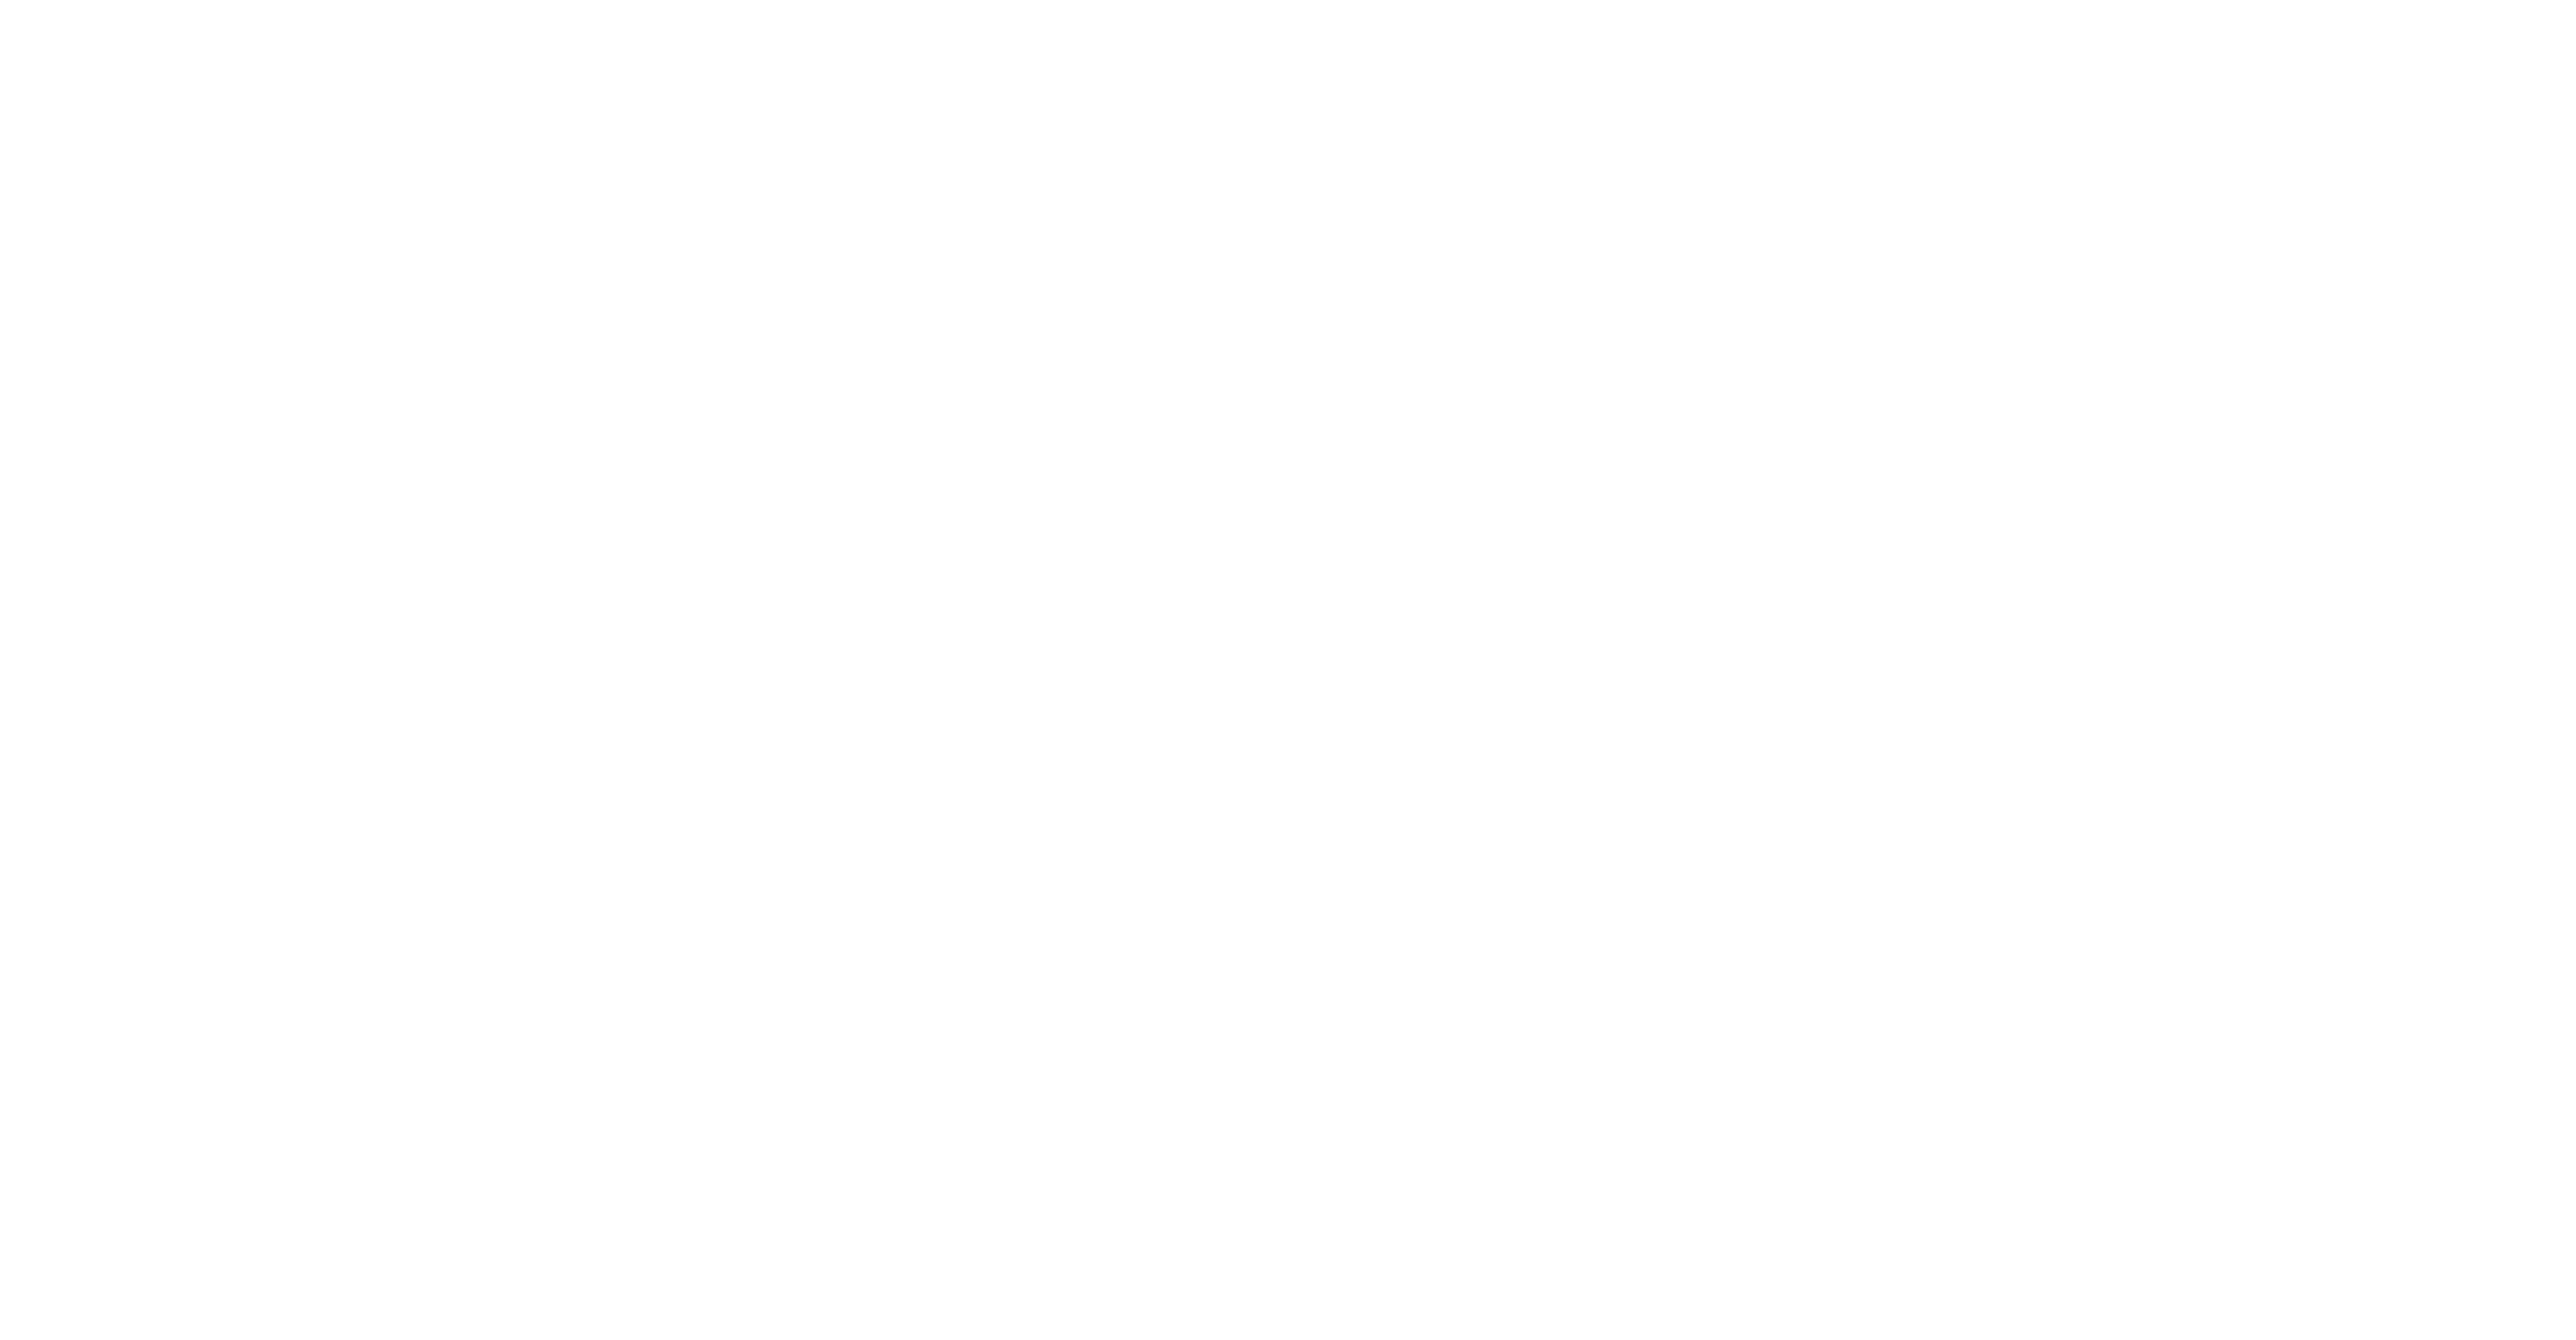 Liz Clairborne logo